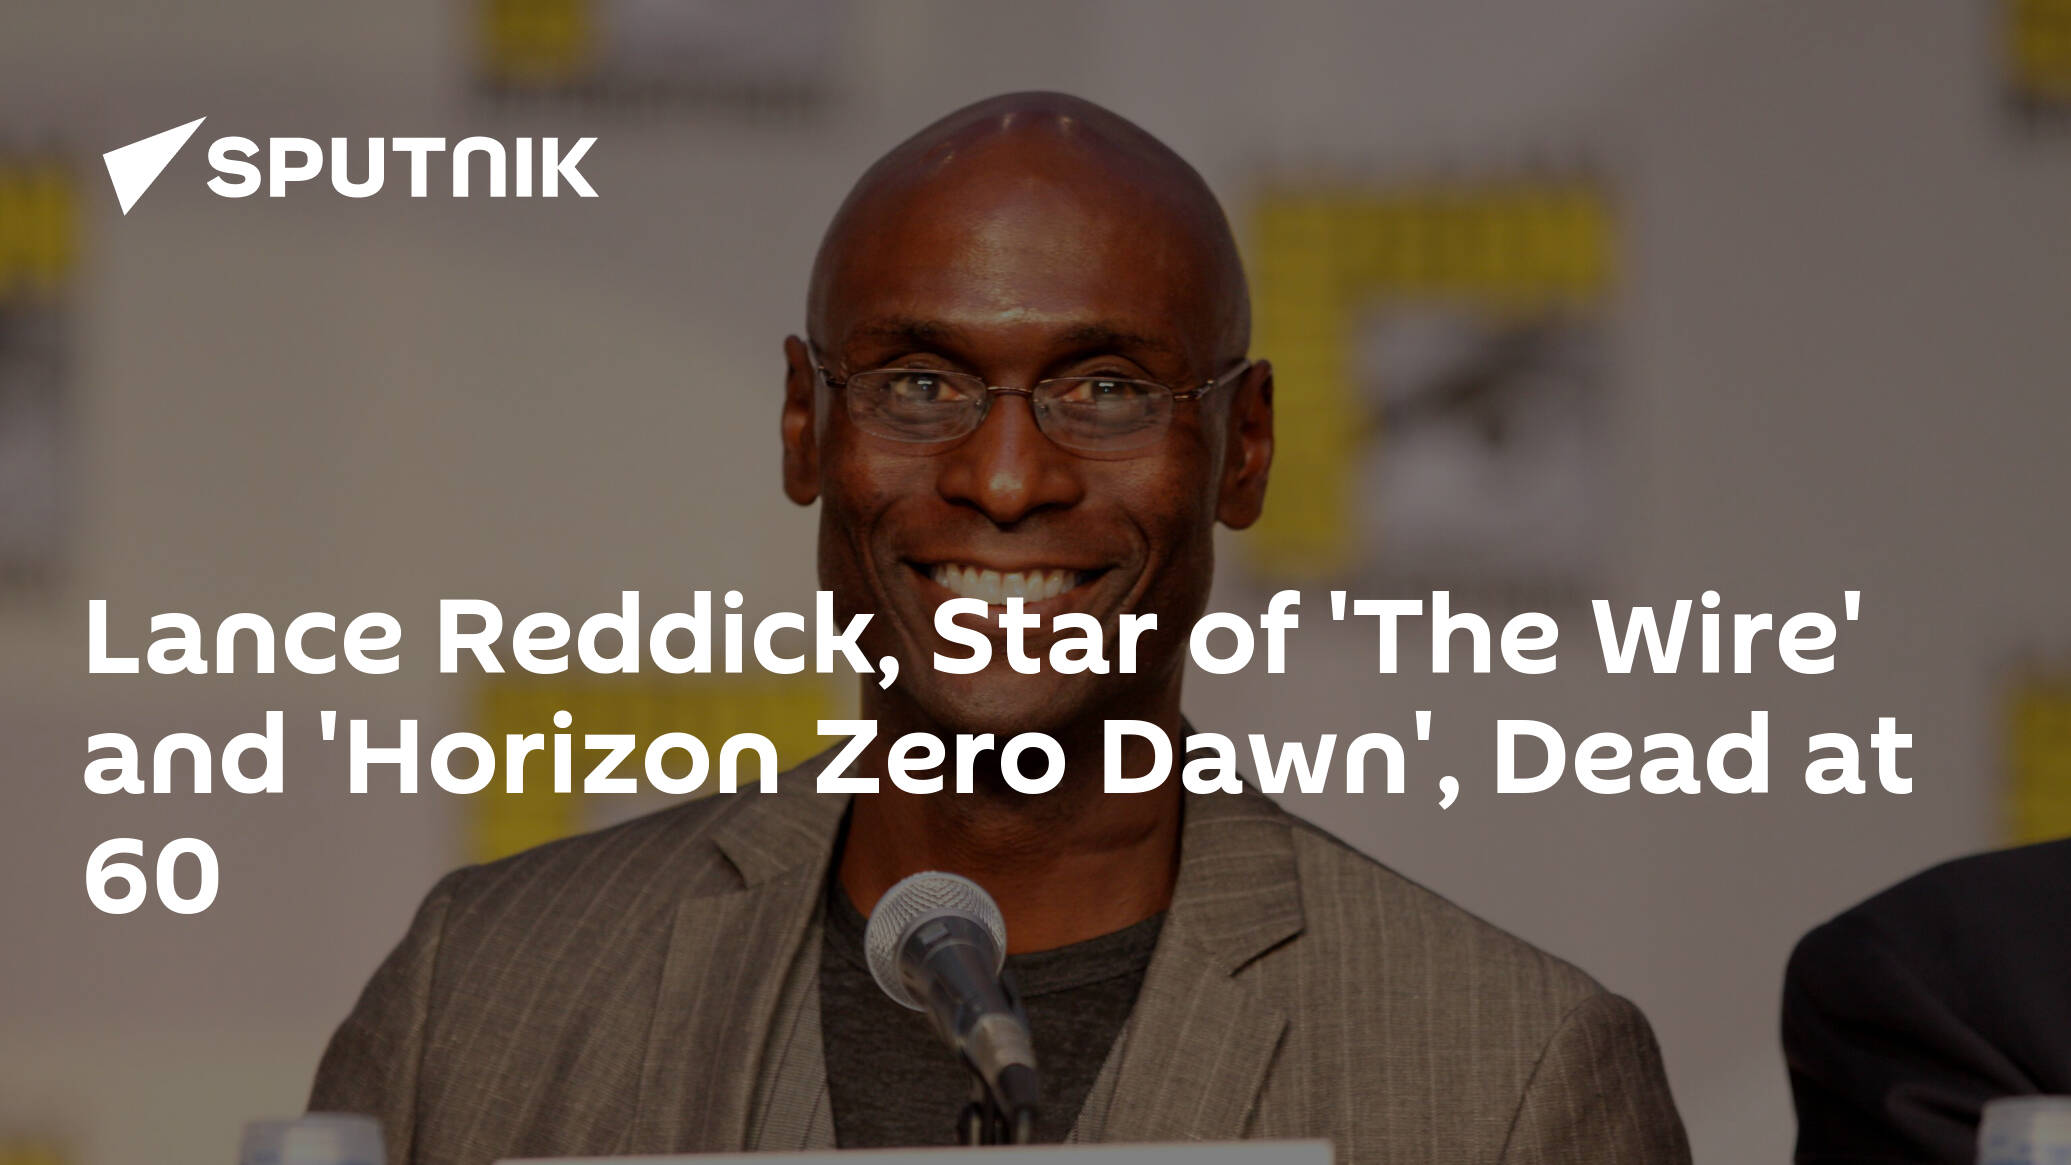 Lance Reddick, Horizon Zero Dawn and The Wire Actor, Dies Aged 60